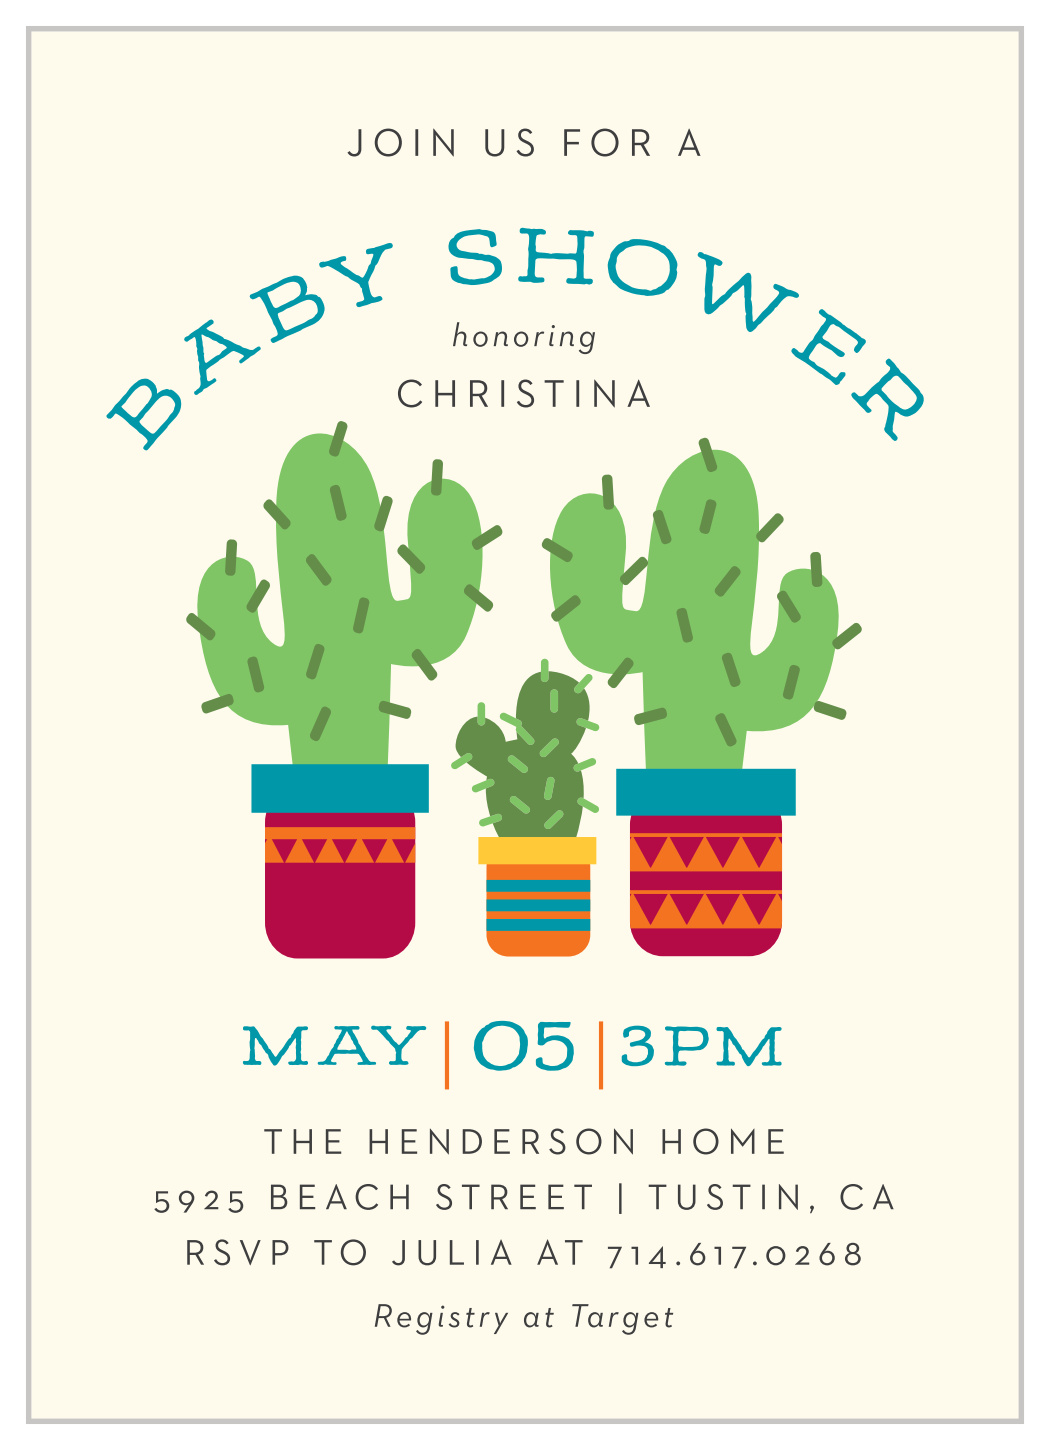 cactus baby shower